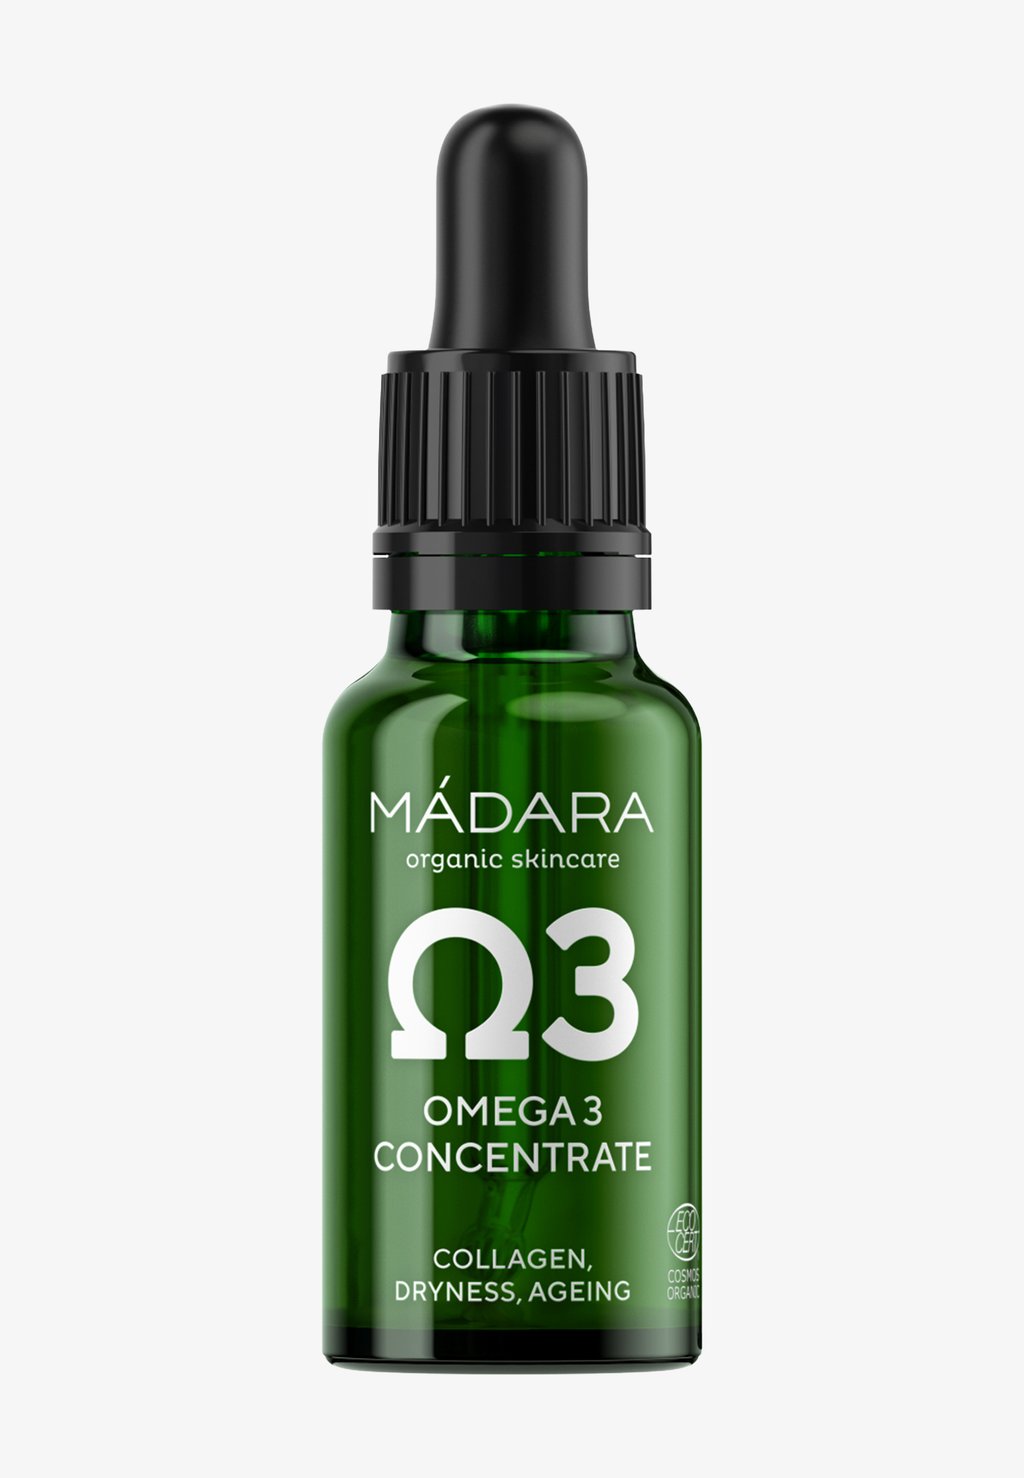 Сыворотка Omega 3 Concentrate MÁDARA